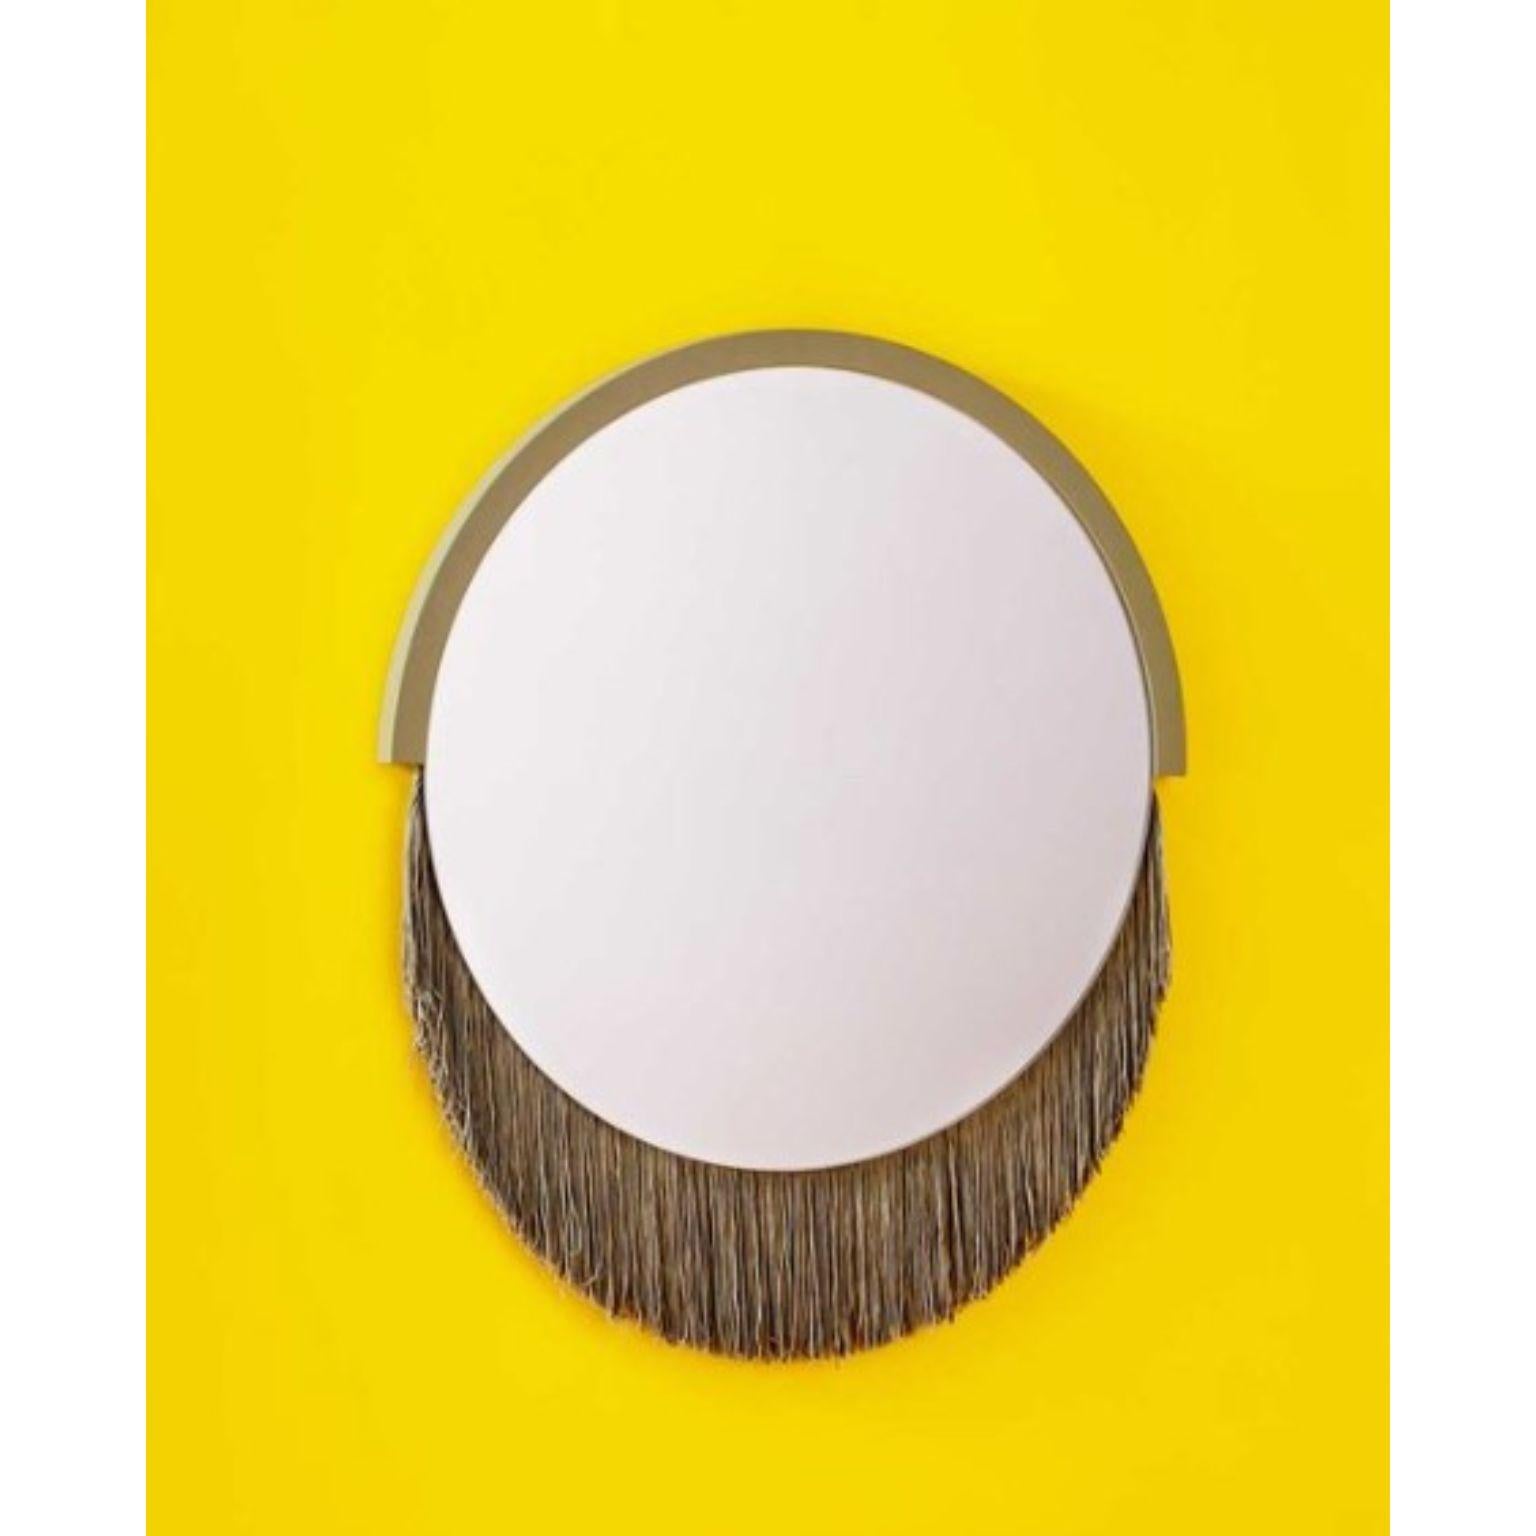 Post-Modern Boudoir Medium Wall Mirror by Tero Kuitunen For Sale